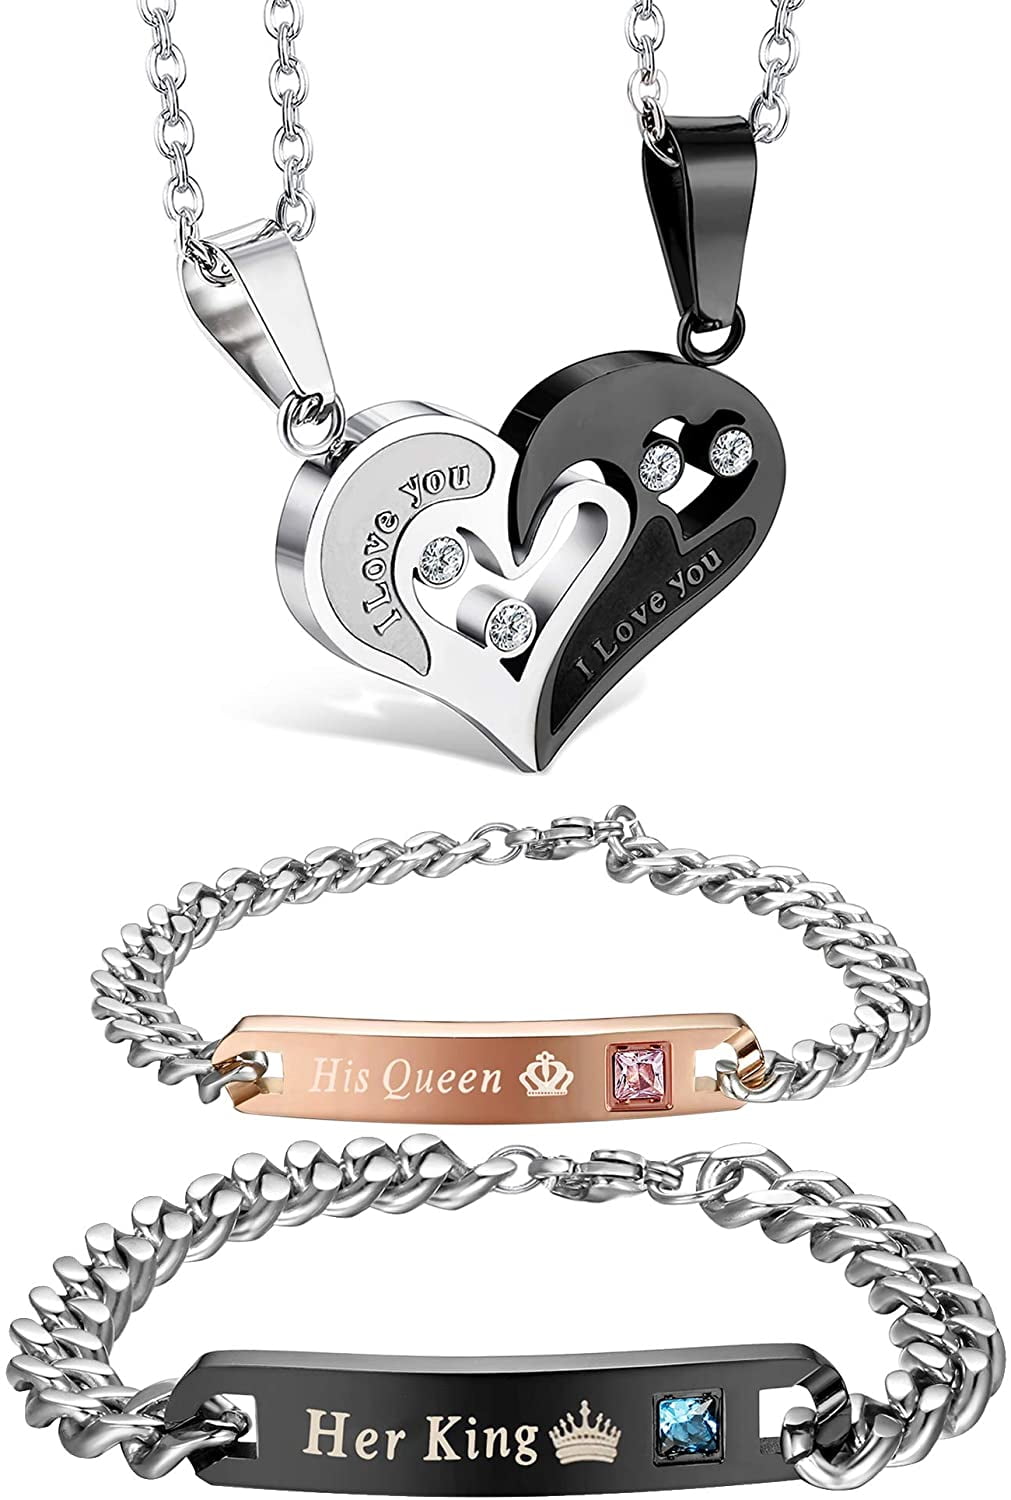 Concentric Lock Bracelet Necklace Titanium Steel Heart Key Couple Interlock  Same As TIK TOK Romantic Commemorate Jewelry Sets From Guichenearring,  $20.08 | DHgate.Com